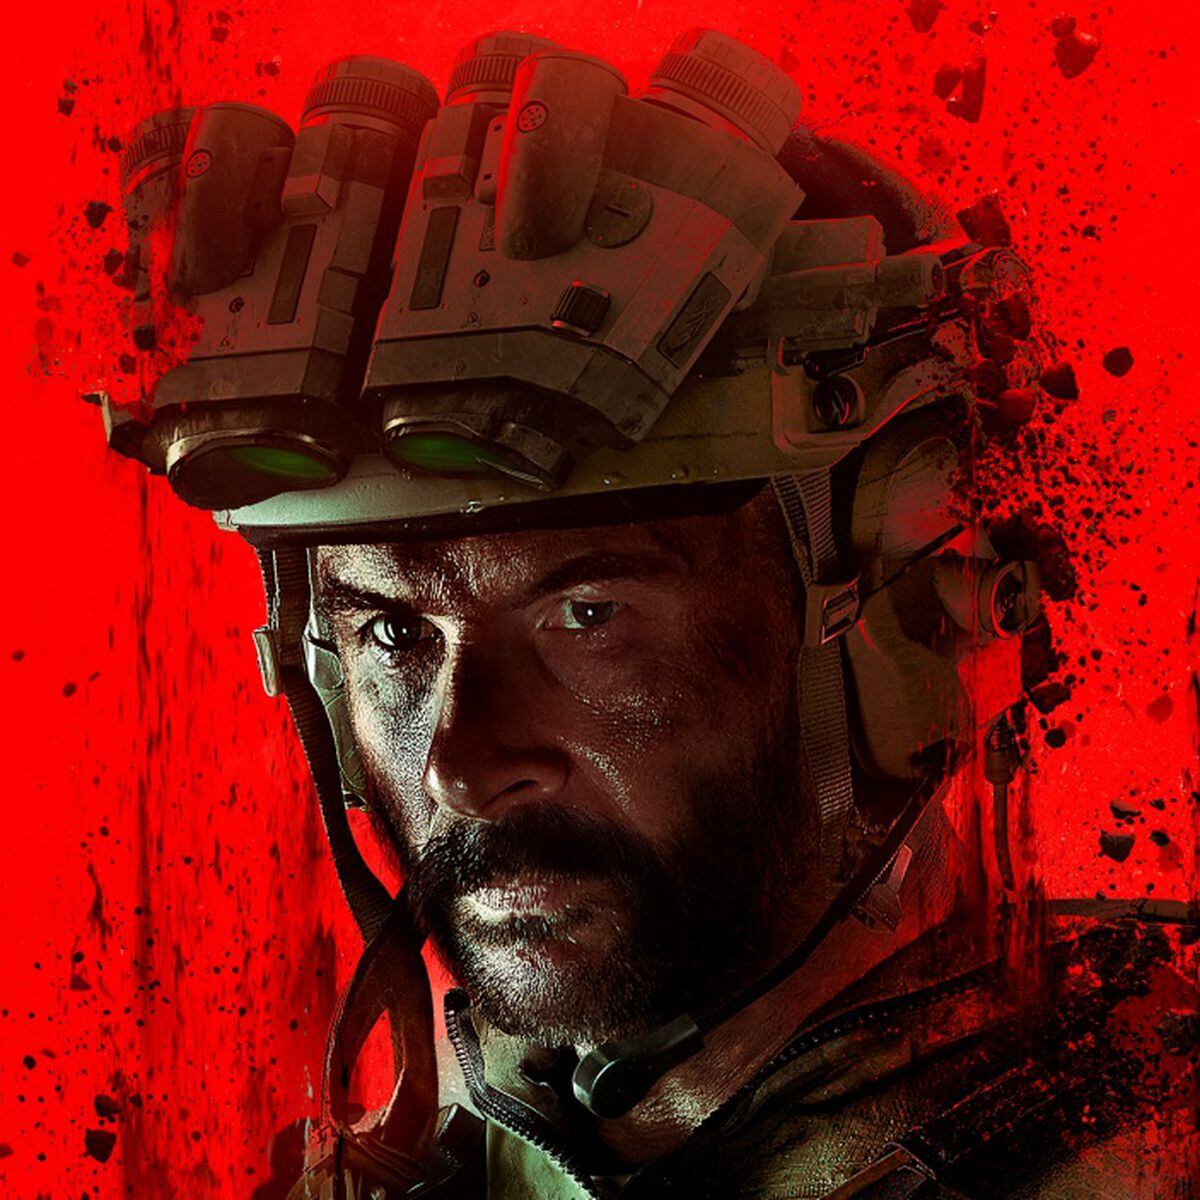 Shadow Siege Limited-Time Modern Warfare III Reveal Event — Call